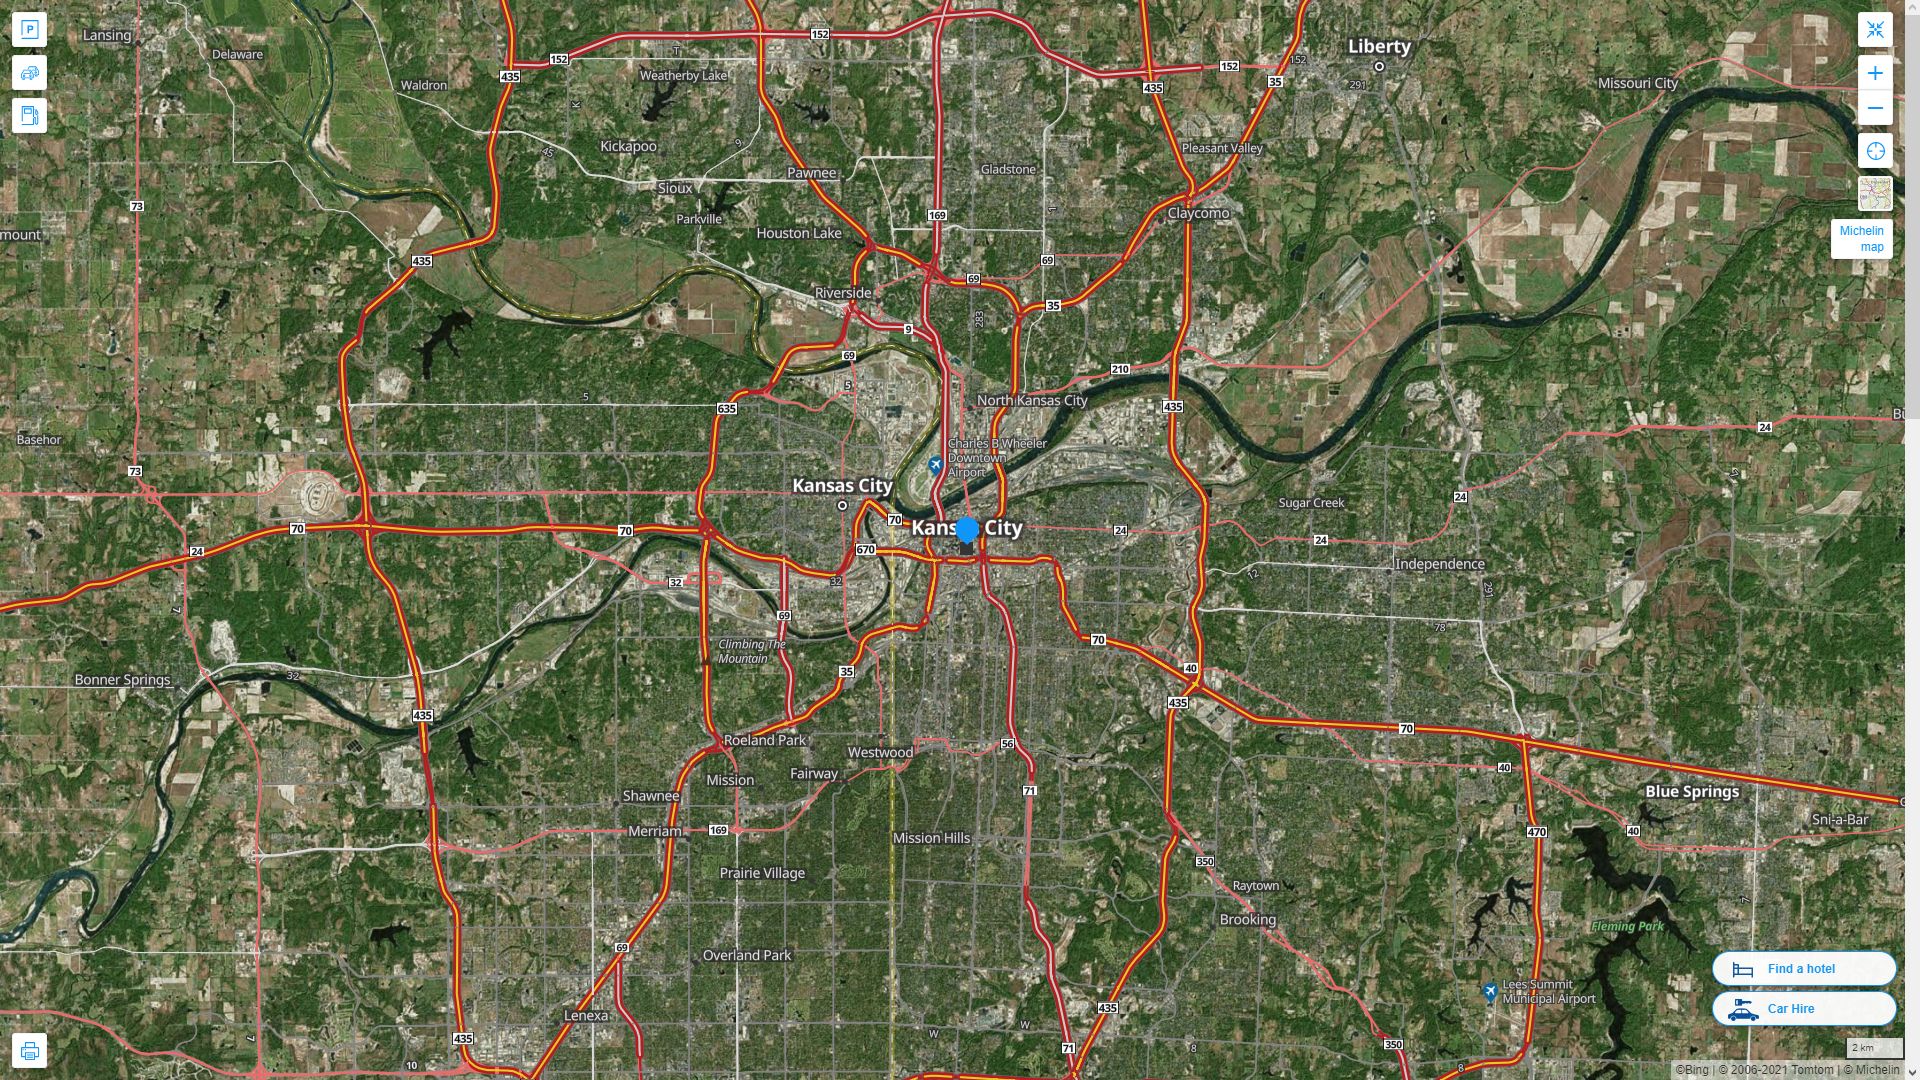 Kansas City Kansas Highway and Road Map with Satellite View